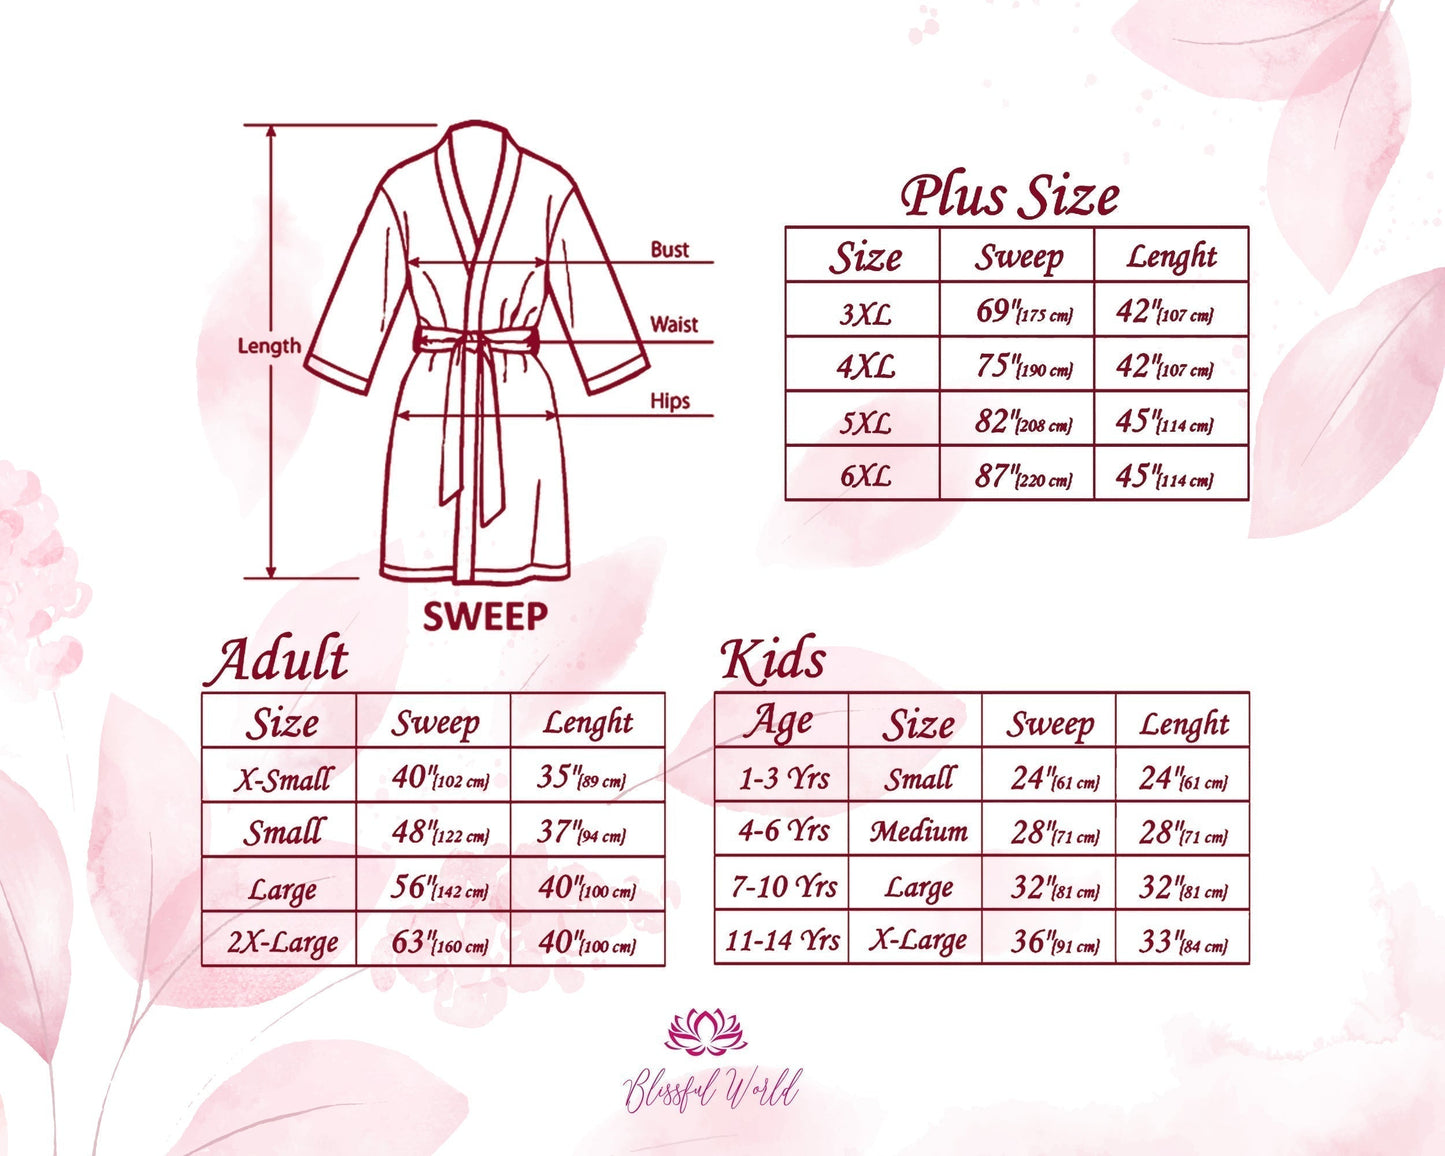 Custom Ruffle Robes Custom Lace Robes Cotton Ruffle Robes Cotton Lace Robes Kimono Robes Lace with Trim Robes